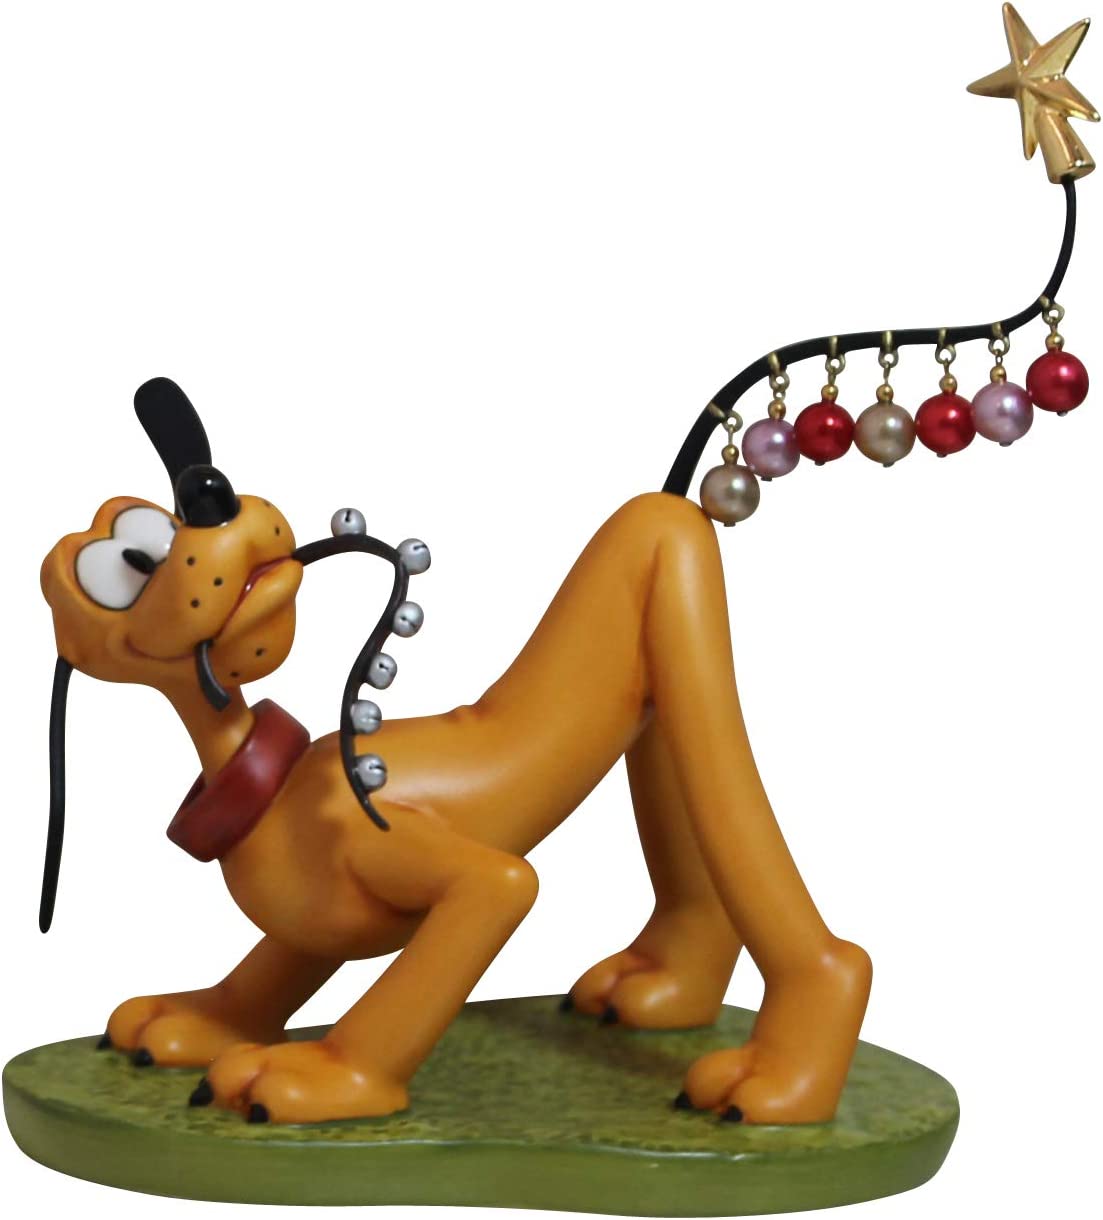 Walt Disney Classics Collection Pluto's Christmas Tree - Pluto Helps Decorate